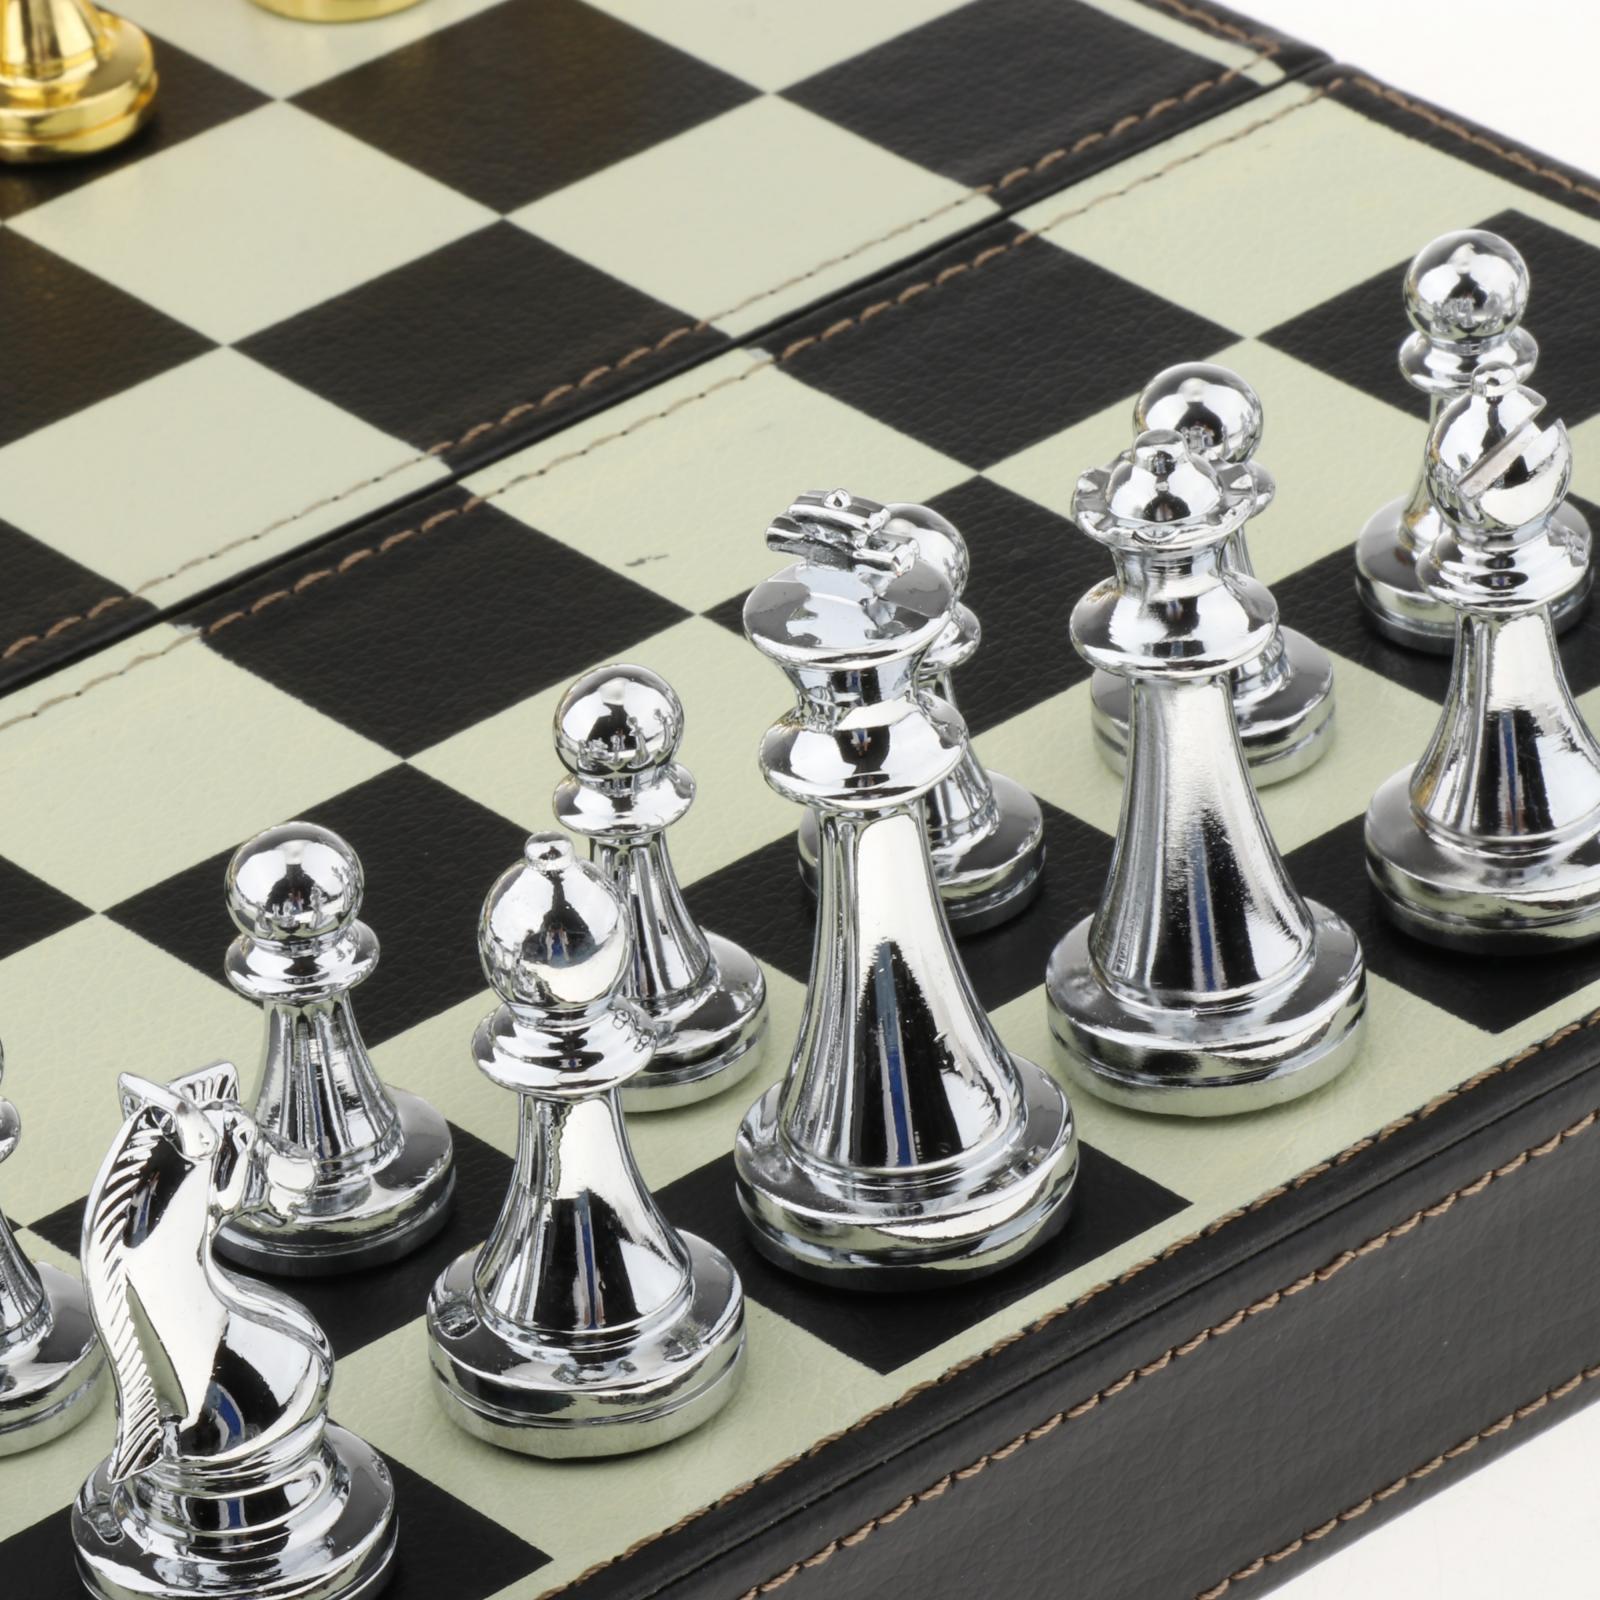 International Chess Set Folding Chess Board Storage Box Travel Game Style 2